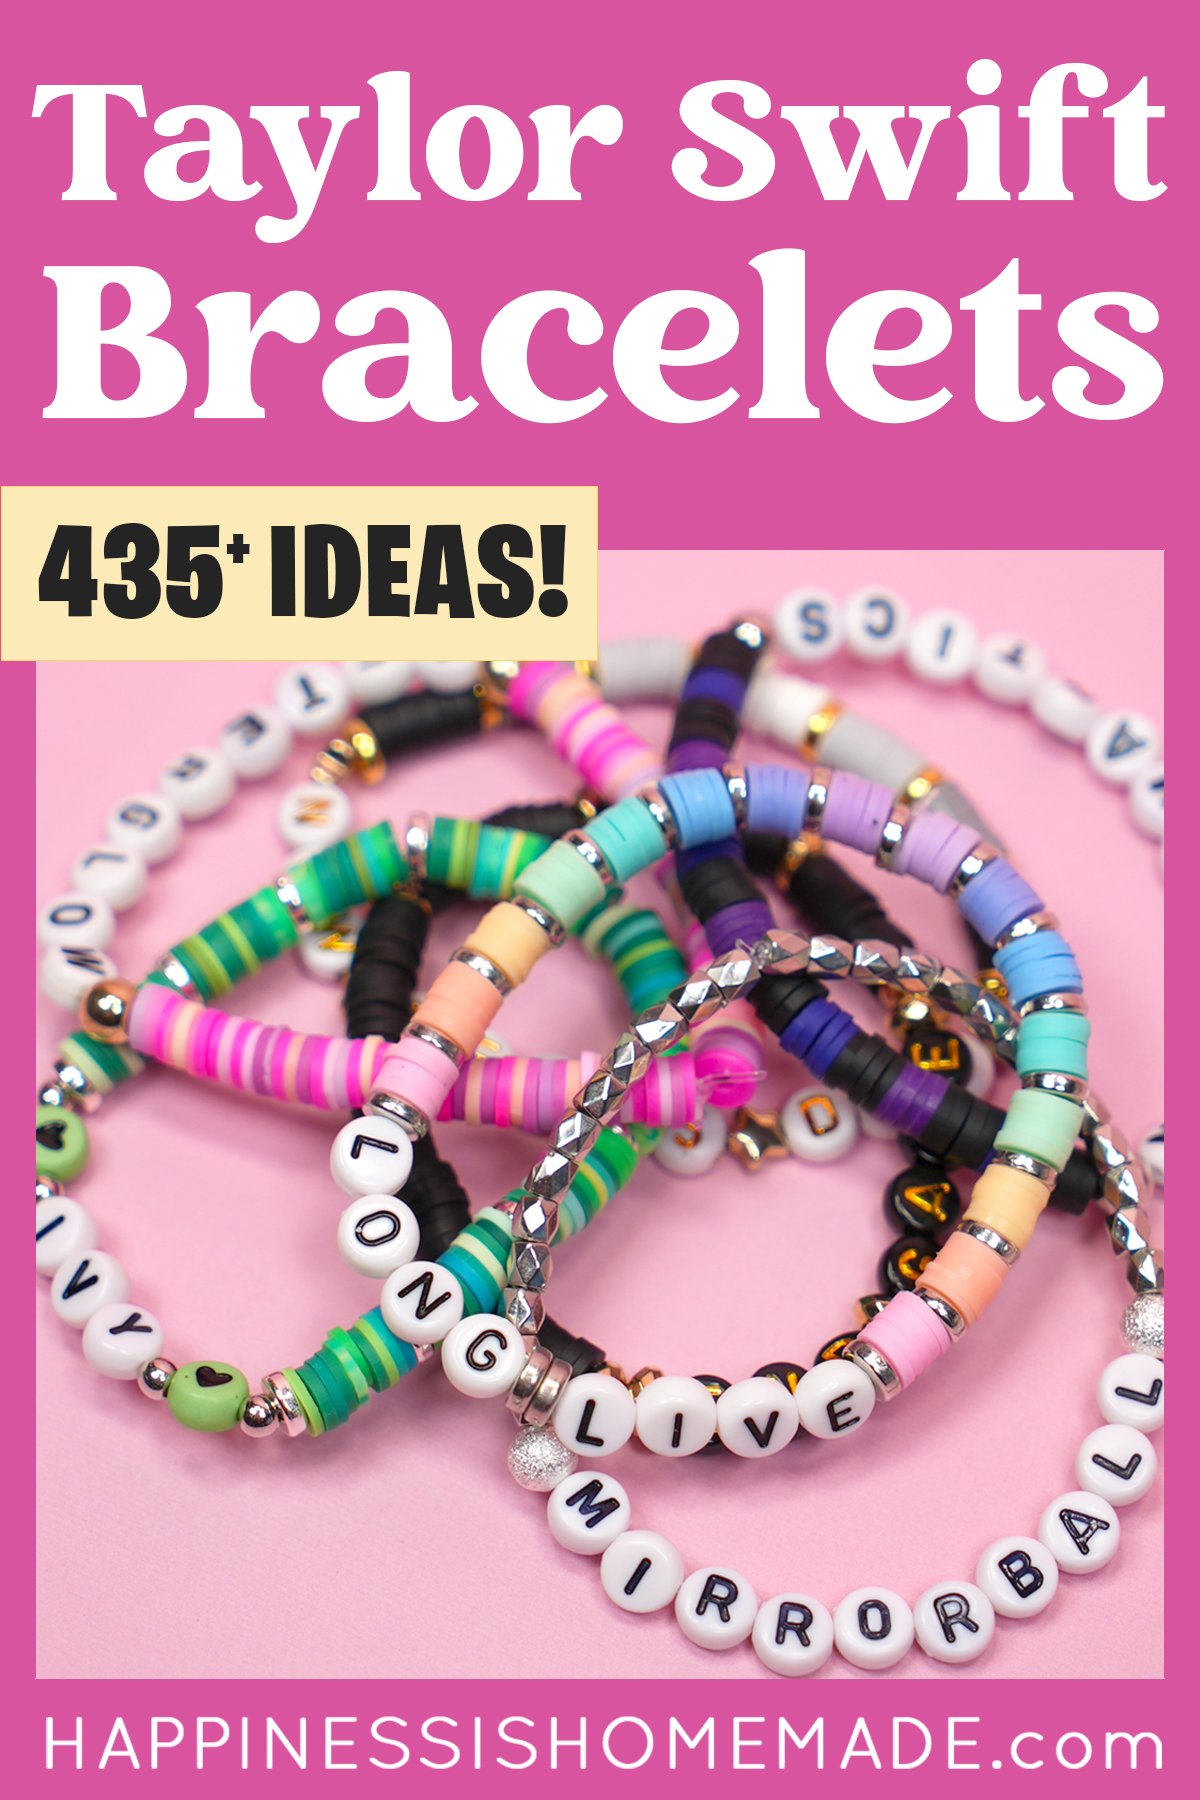 10 Friendship Bracelet Kits On Etsy For This Season's Trendiest DIY